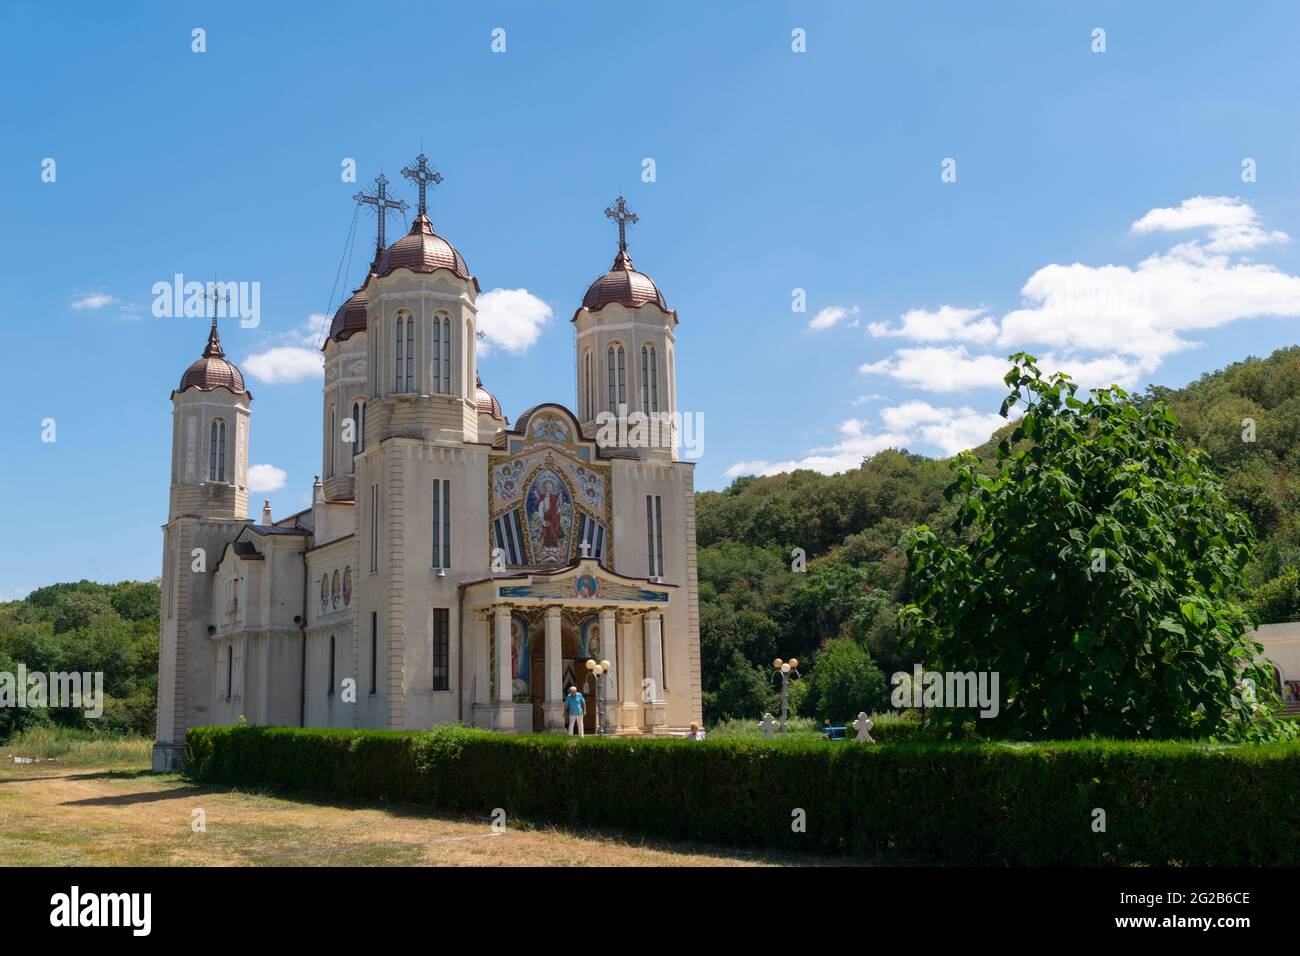 Constanta, Rumänien - 04. August 2020: Kloster der Höhle des heiligen Andreas in der Nähe von Ion Corvin, Constanta, Rumänien. Stockfoto